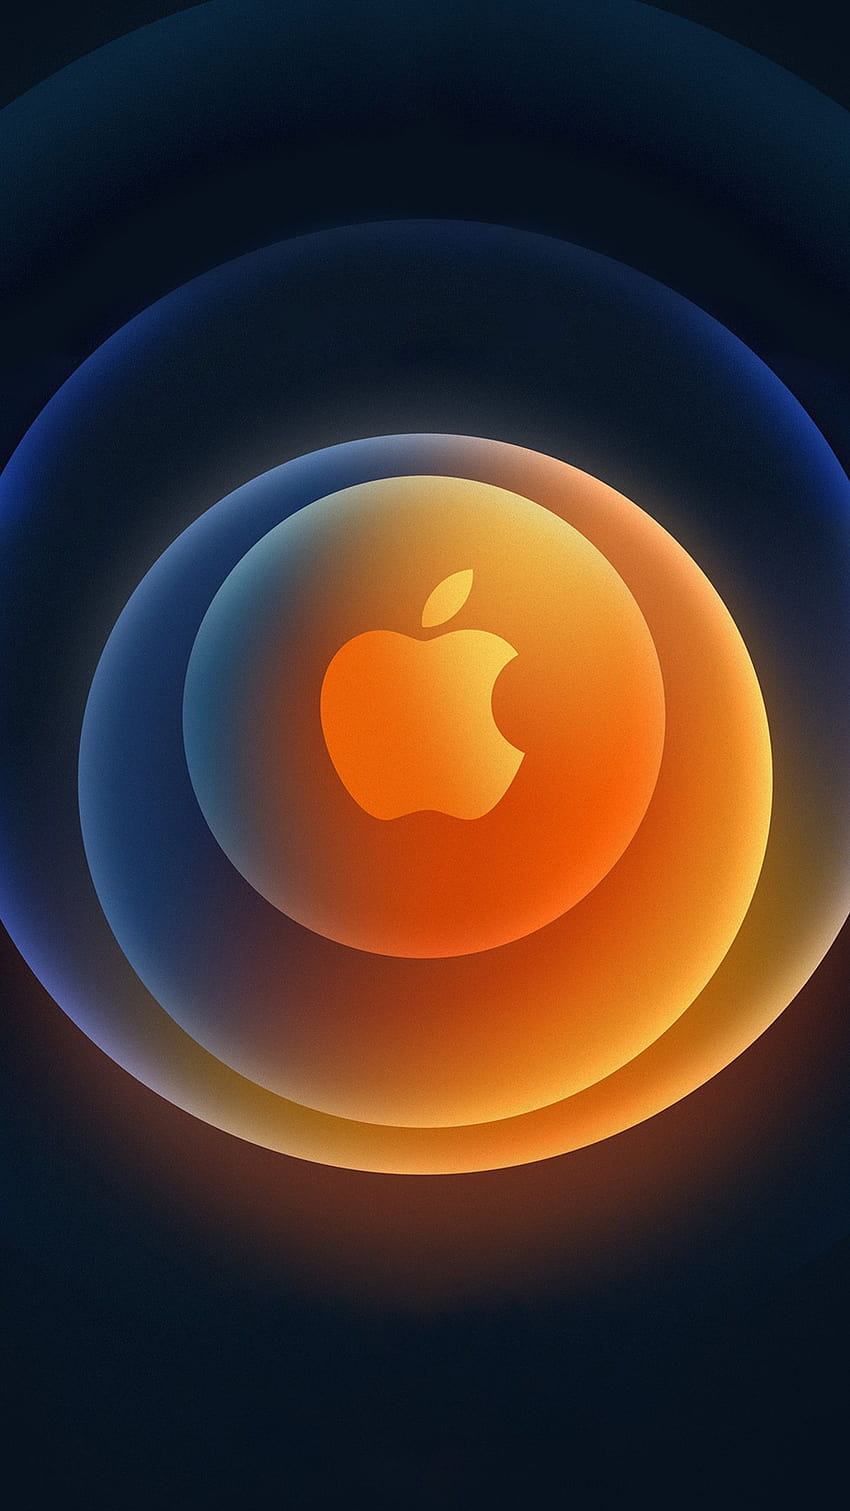 Apple , iPhone 12, Event, 2020, logo, Dark background, Technology ...